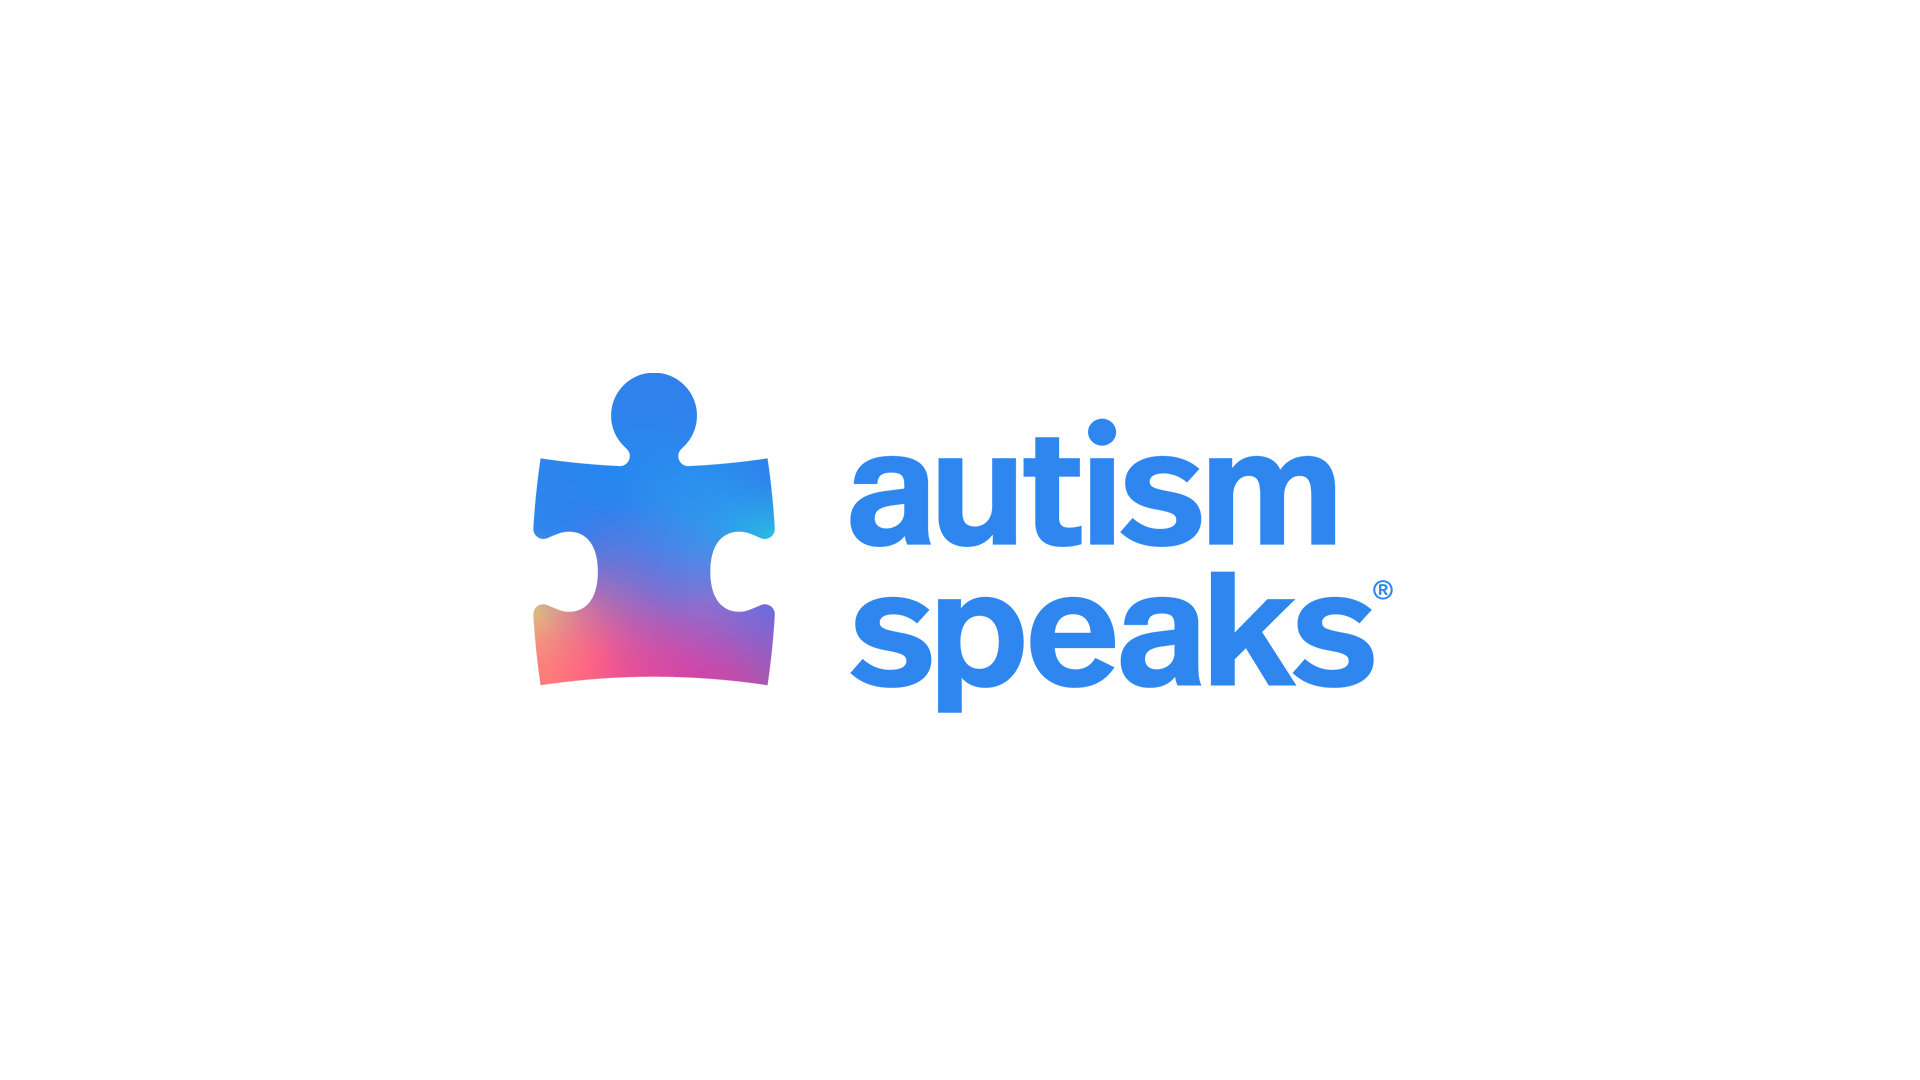 www.autismspeaks.org